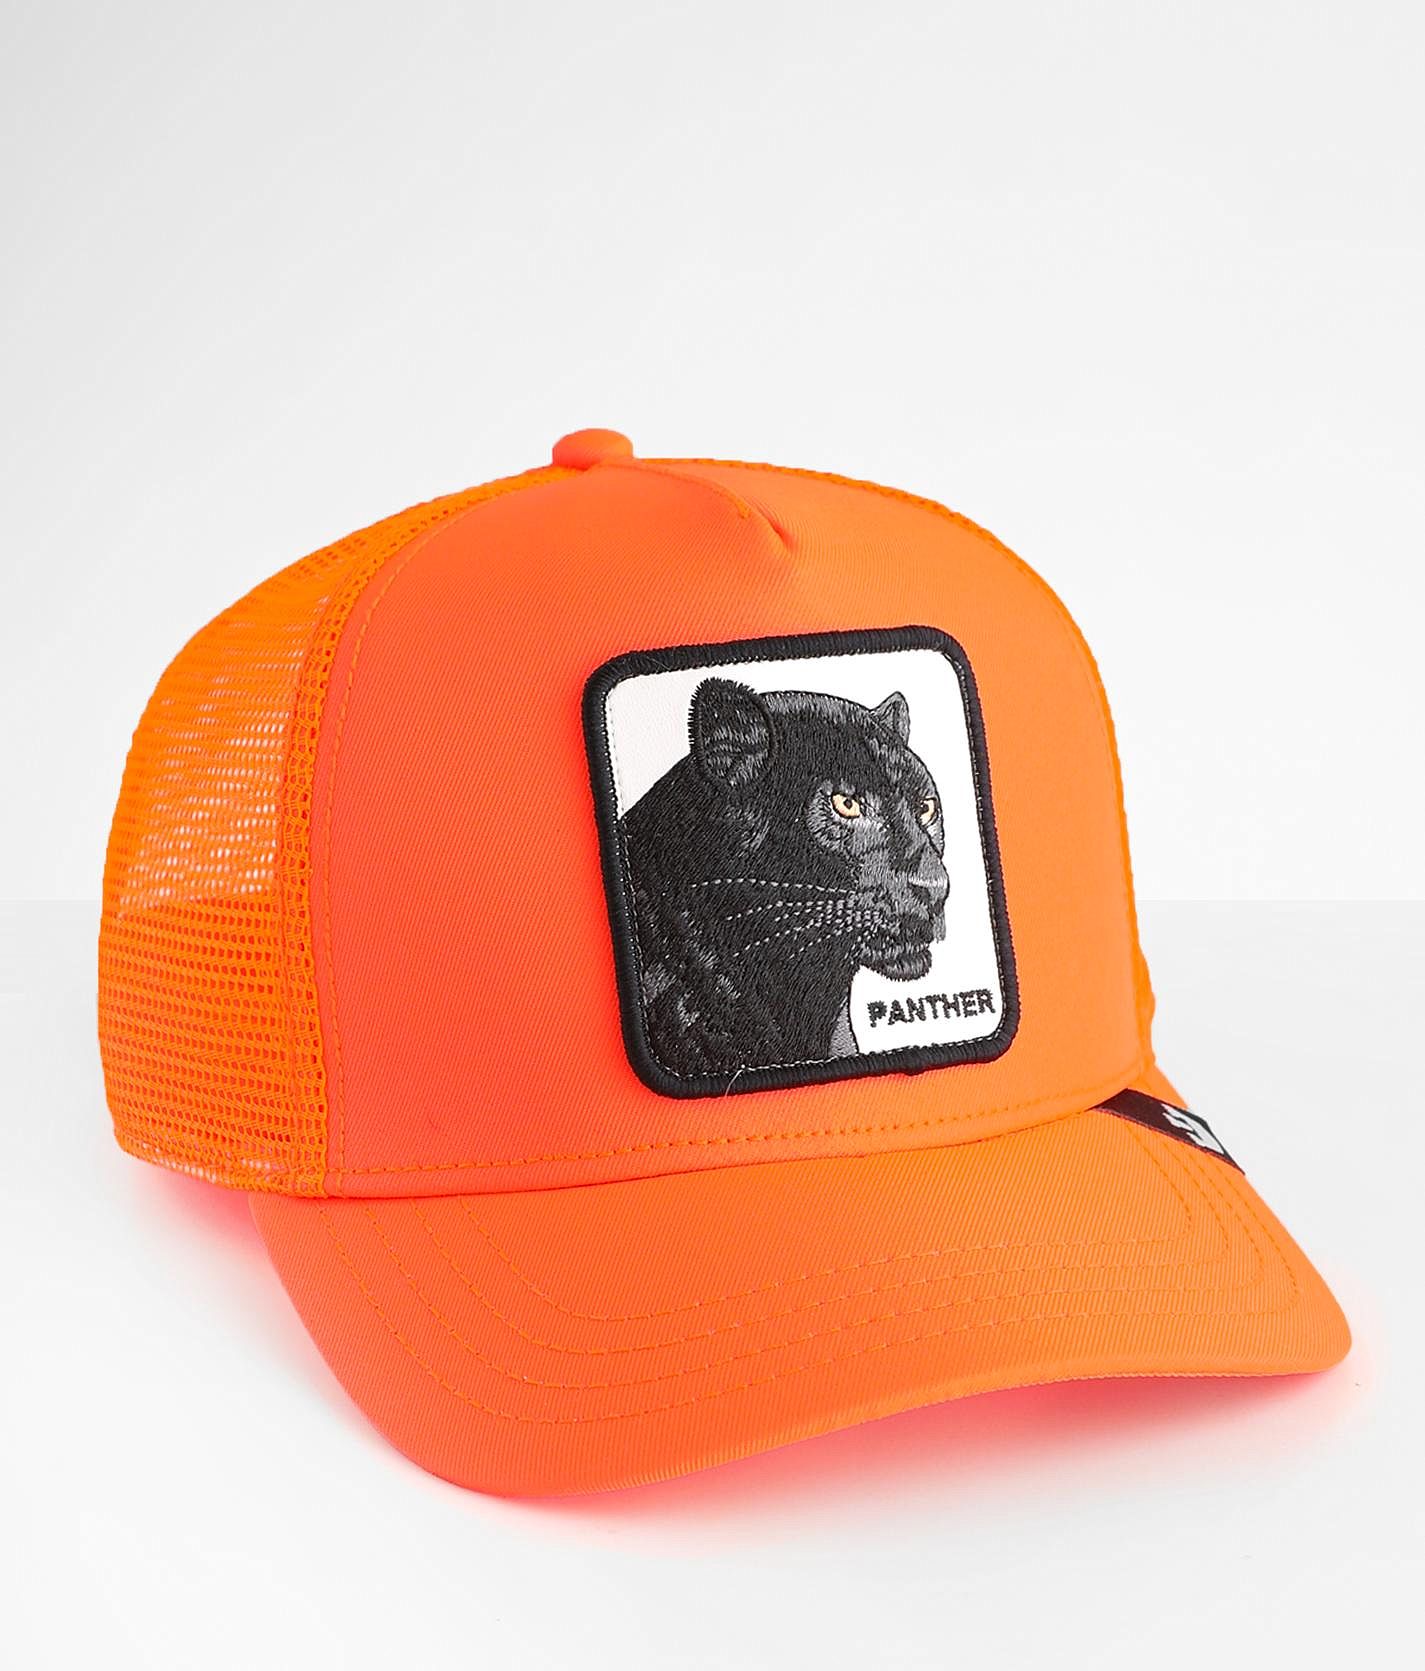 Goorin Brothers Black Panther Trucker Hat - Men's Hats in Orange 